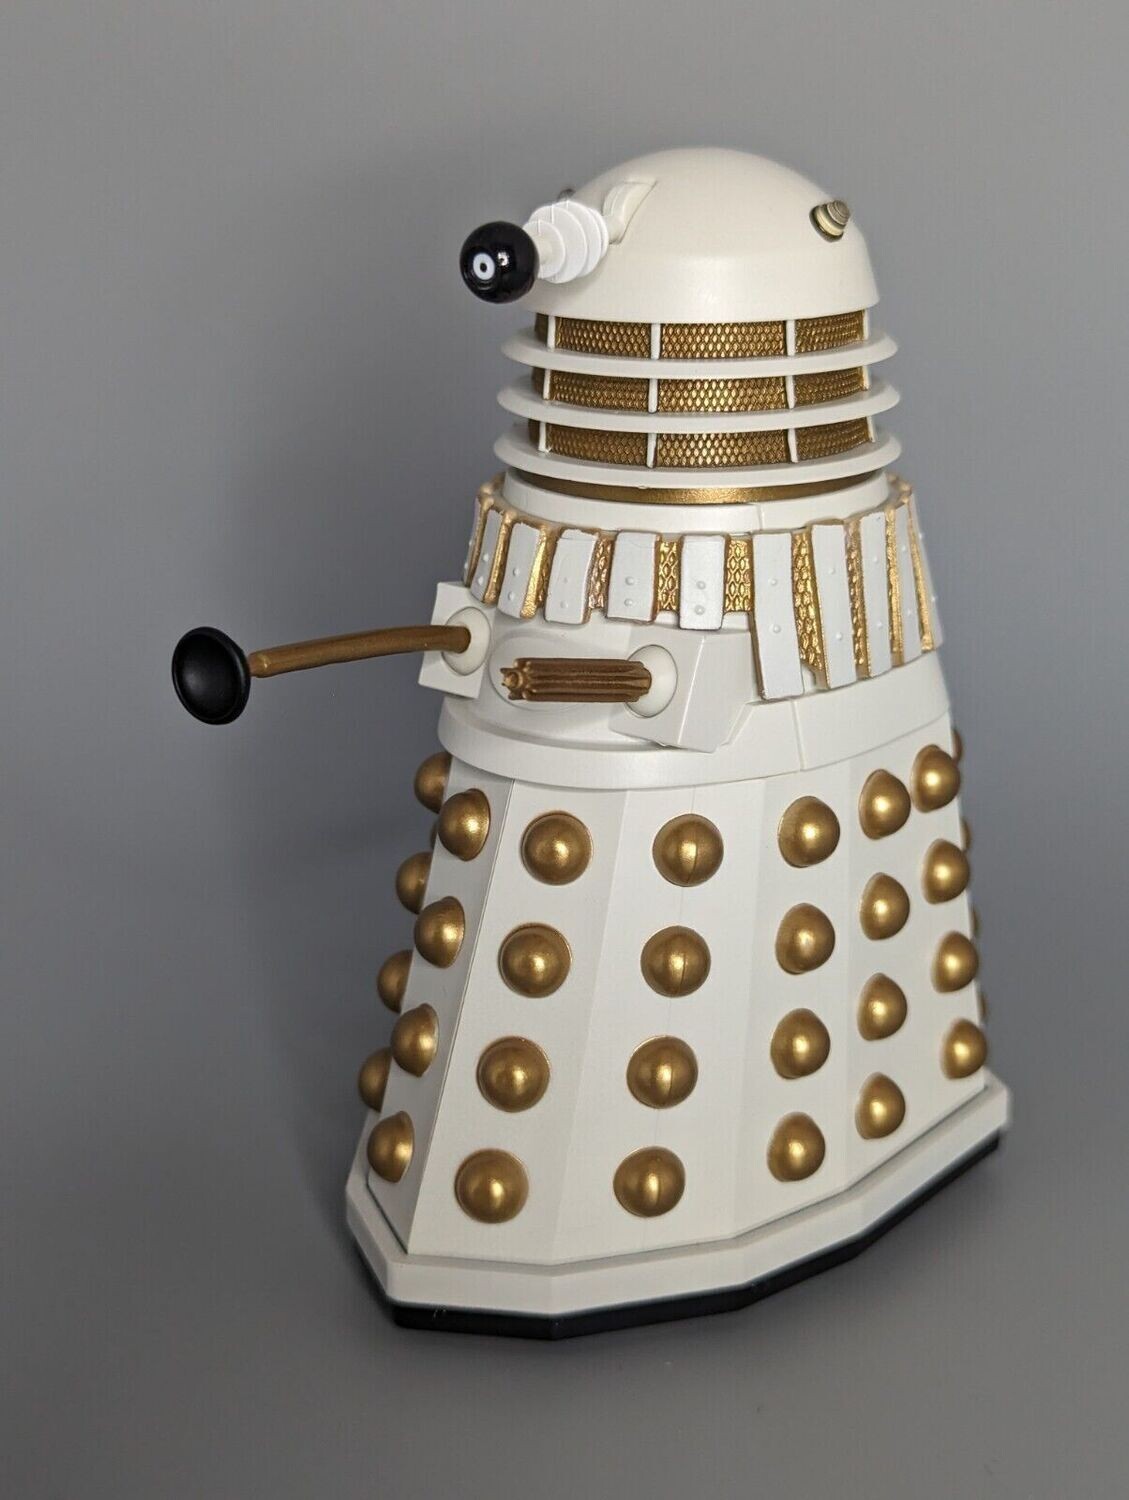 B&M Release "Necros" Dalek 5.5" scale Figure